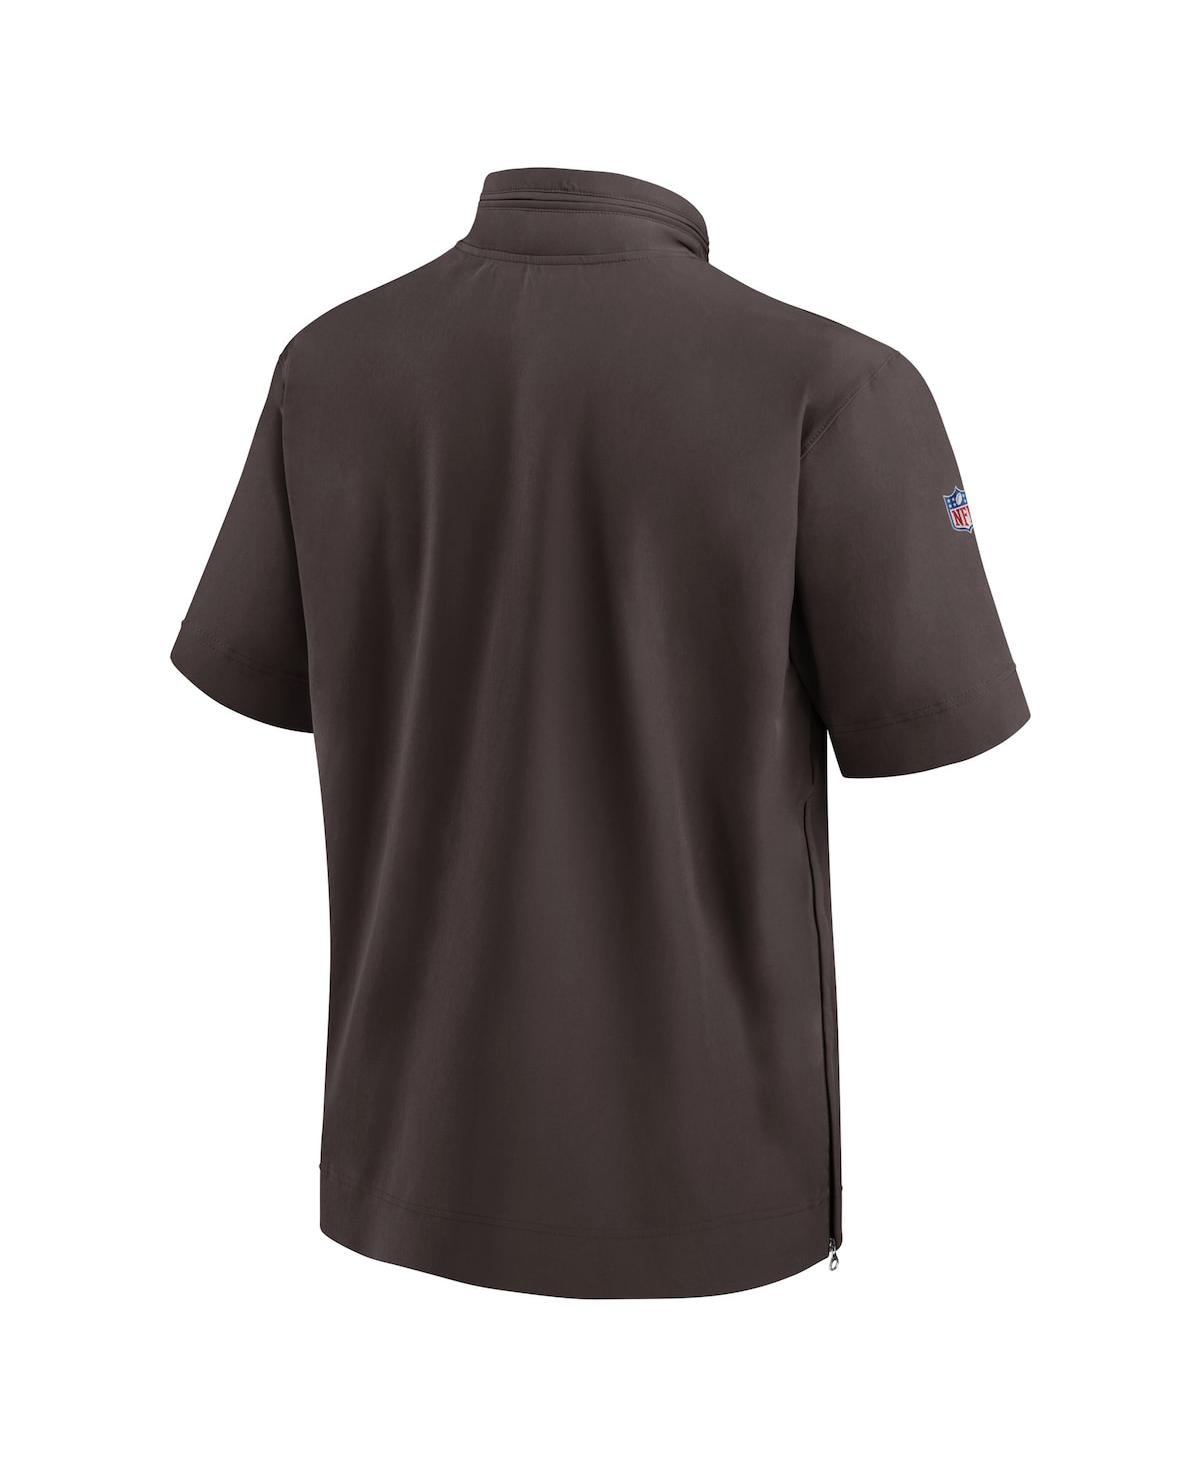 Shop Nike Men's  Brown Cleveland Browns Sideline Coach Short Sleeve Hoodie Quarter-zip Jacket